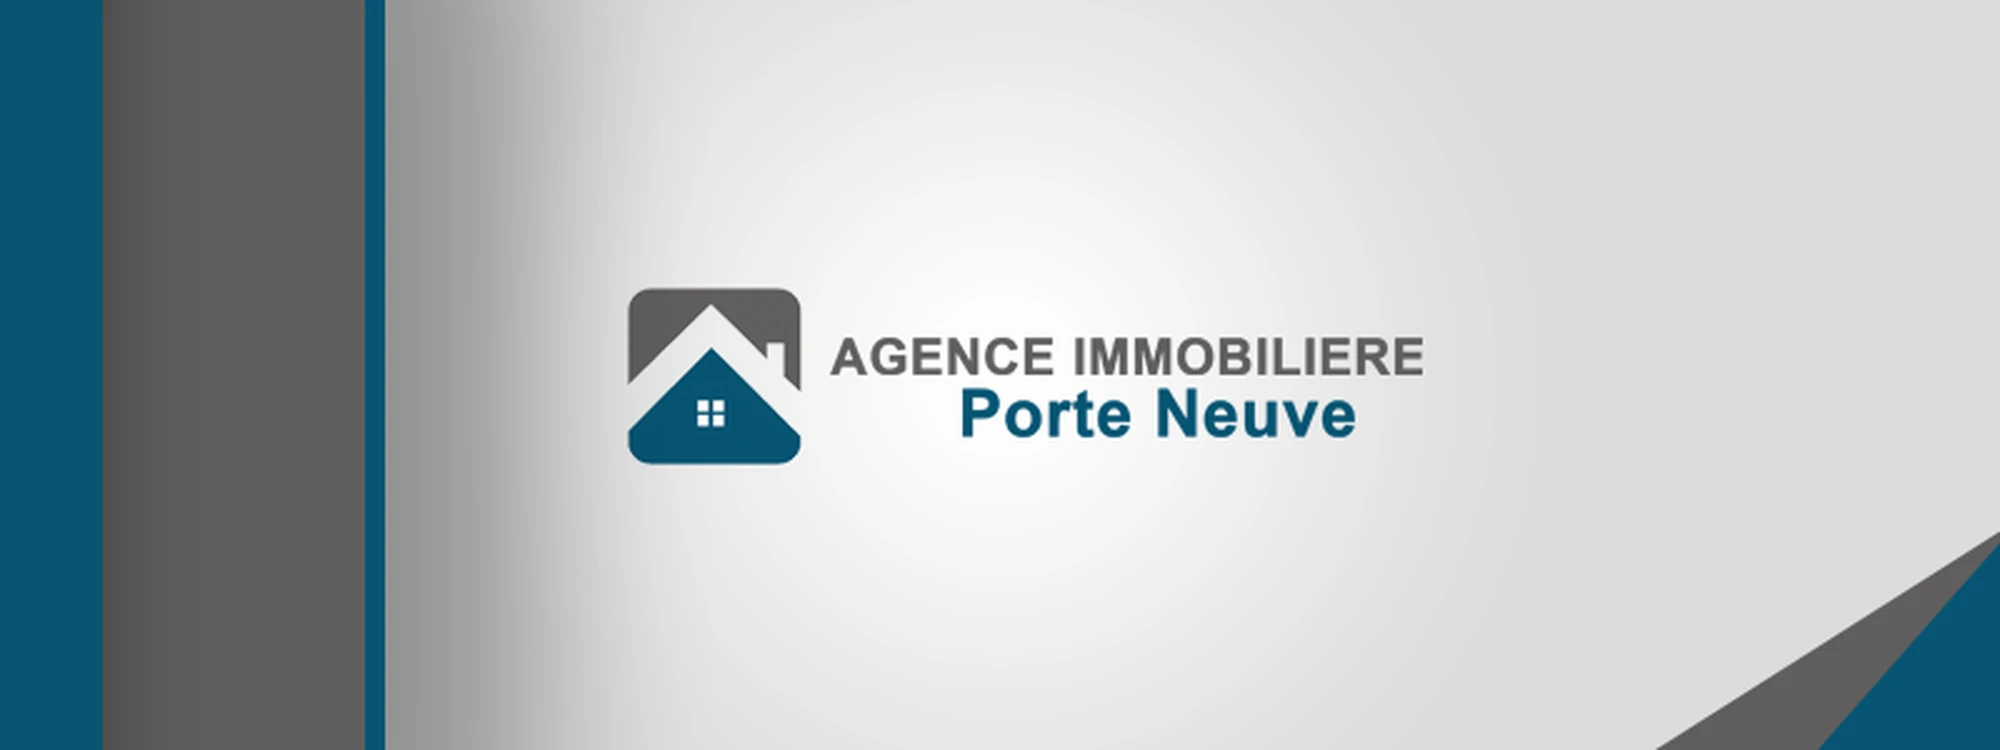 tayara shop cover of Agence Immobiliere Porte Neuve